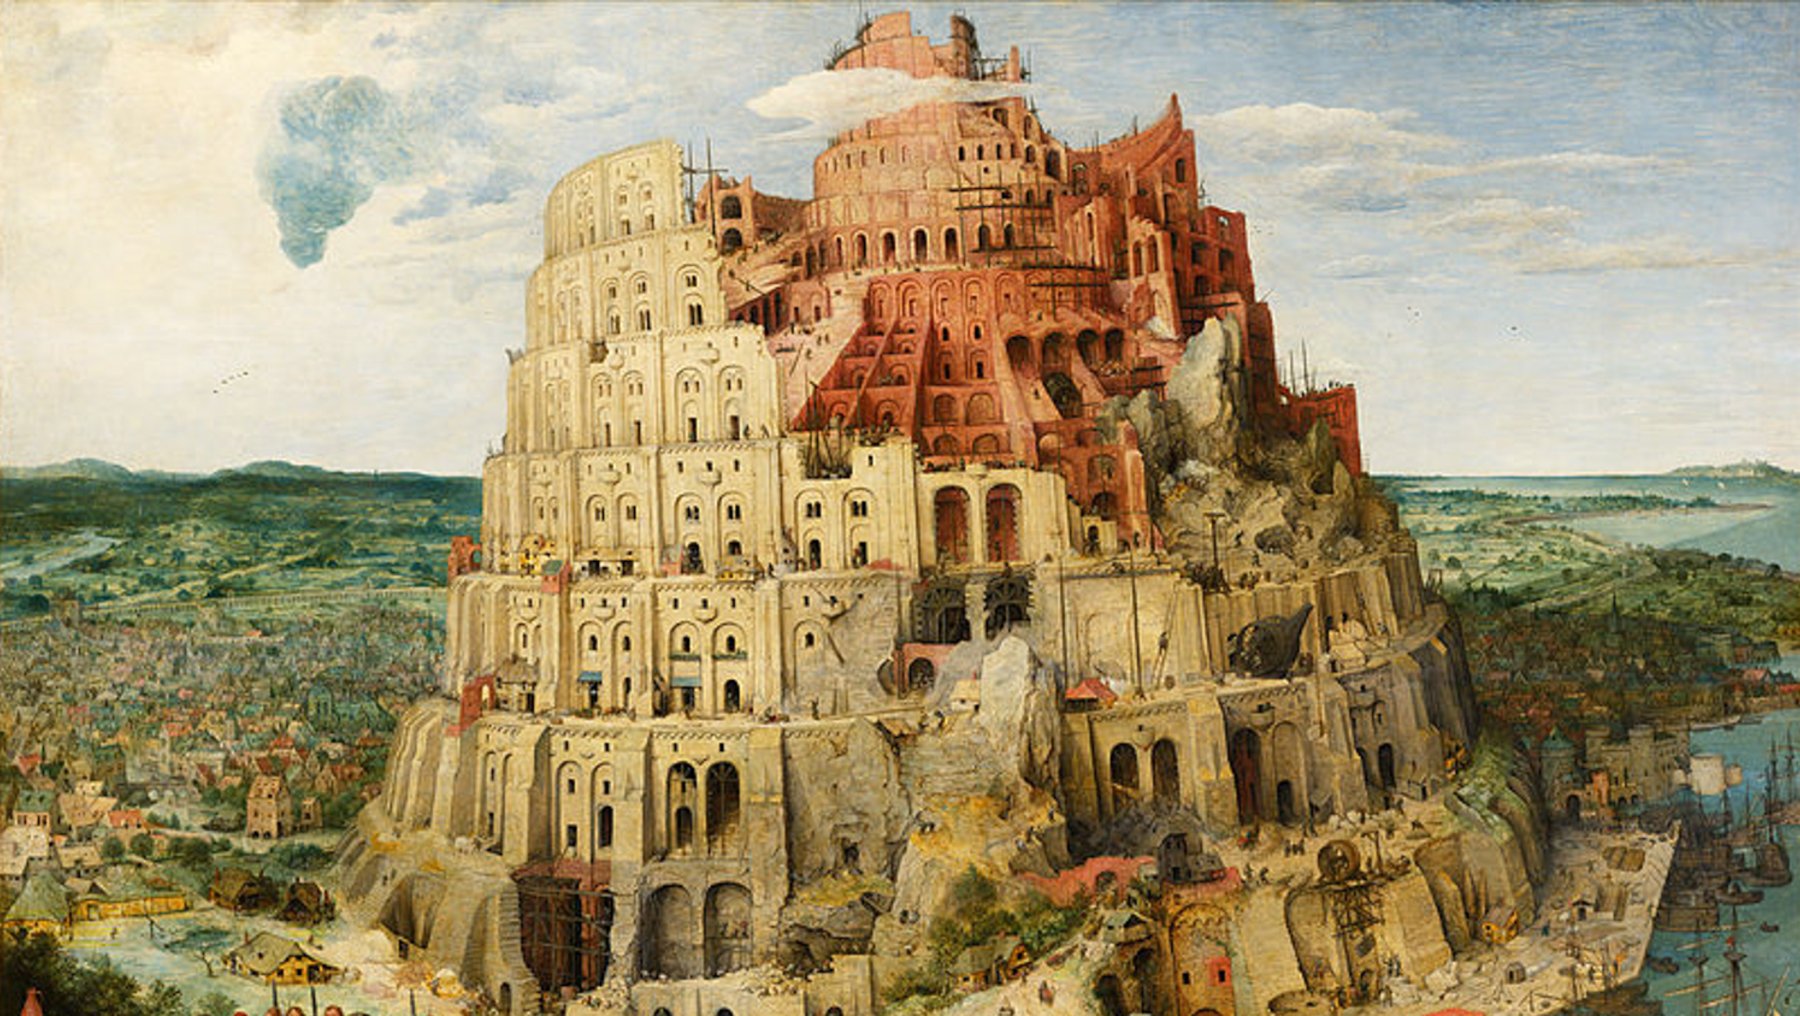 Turm zu Babel